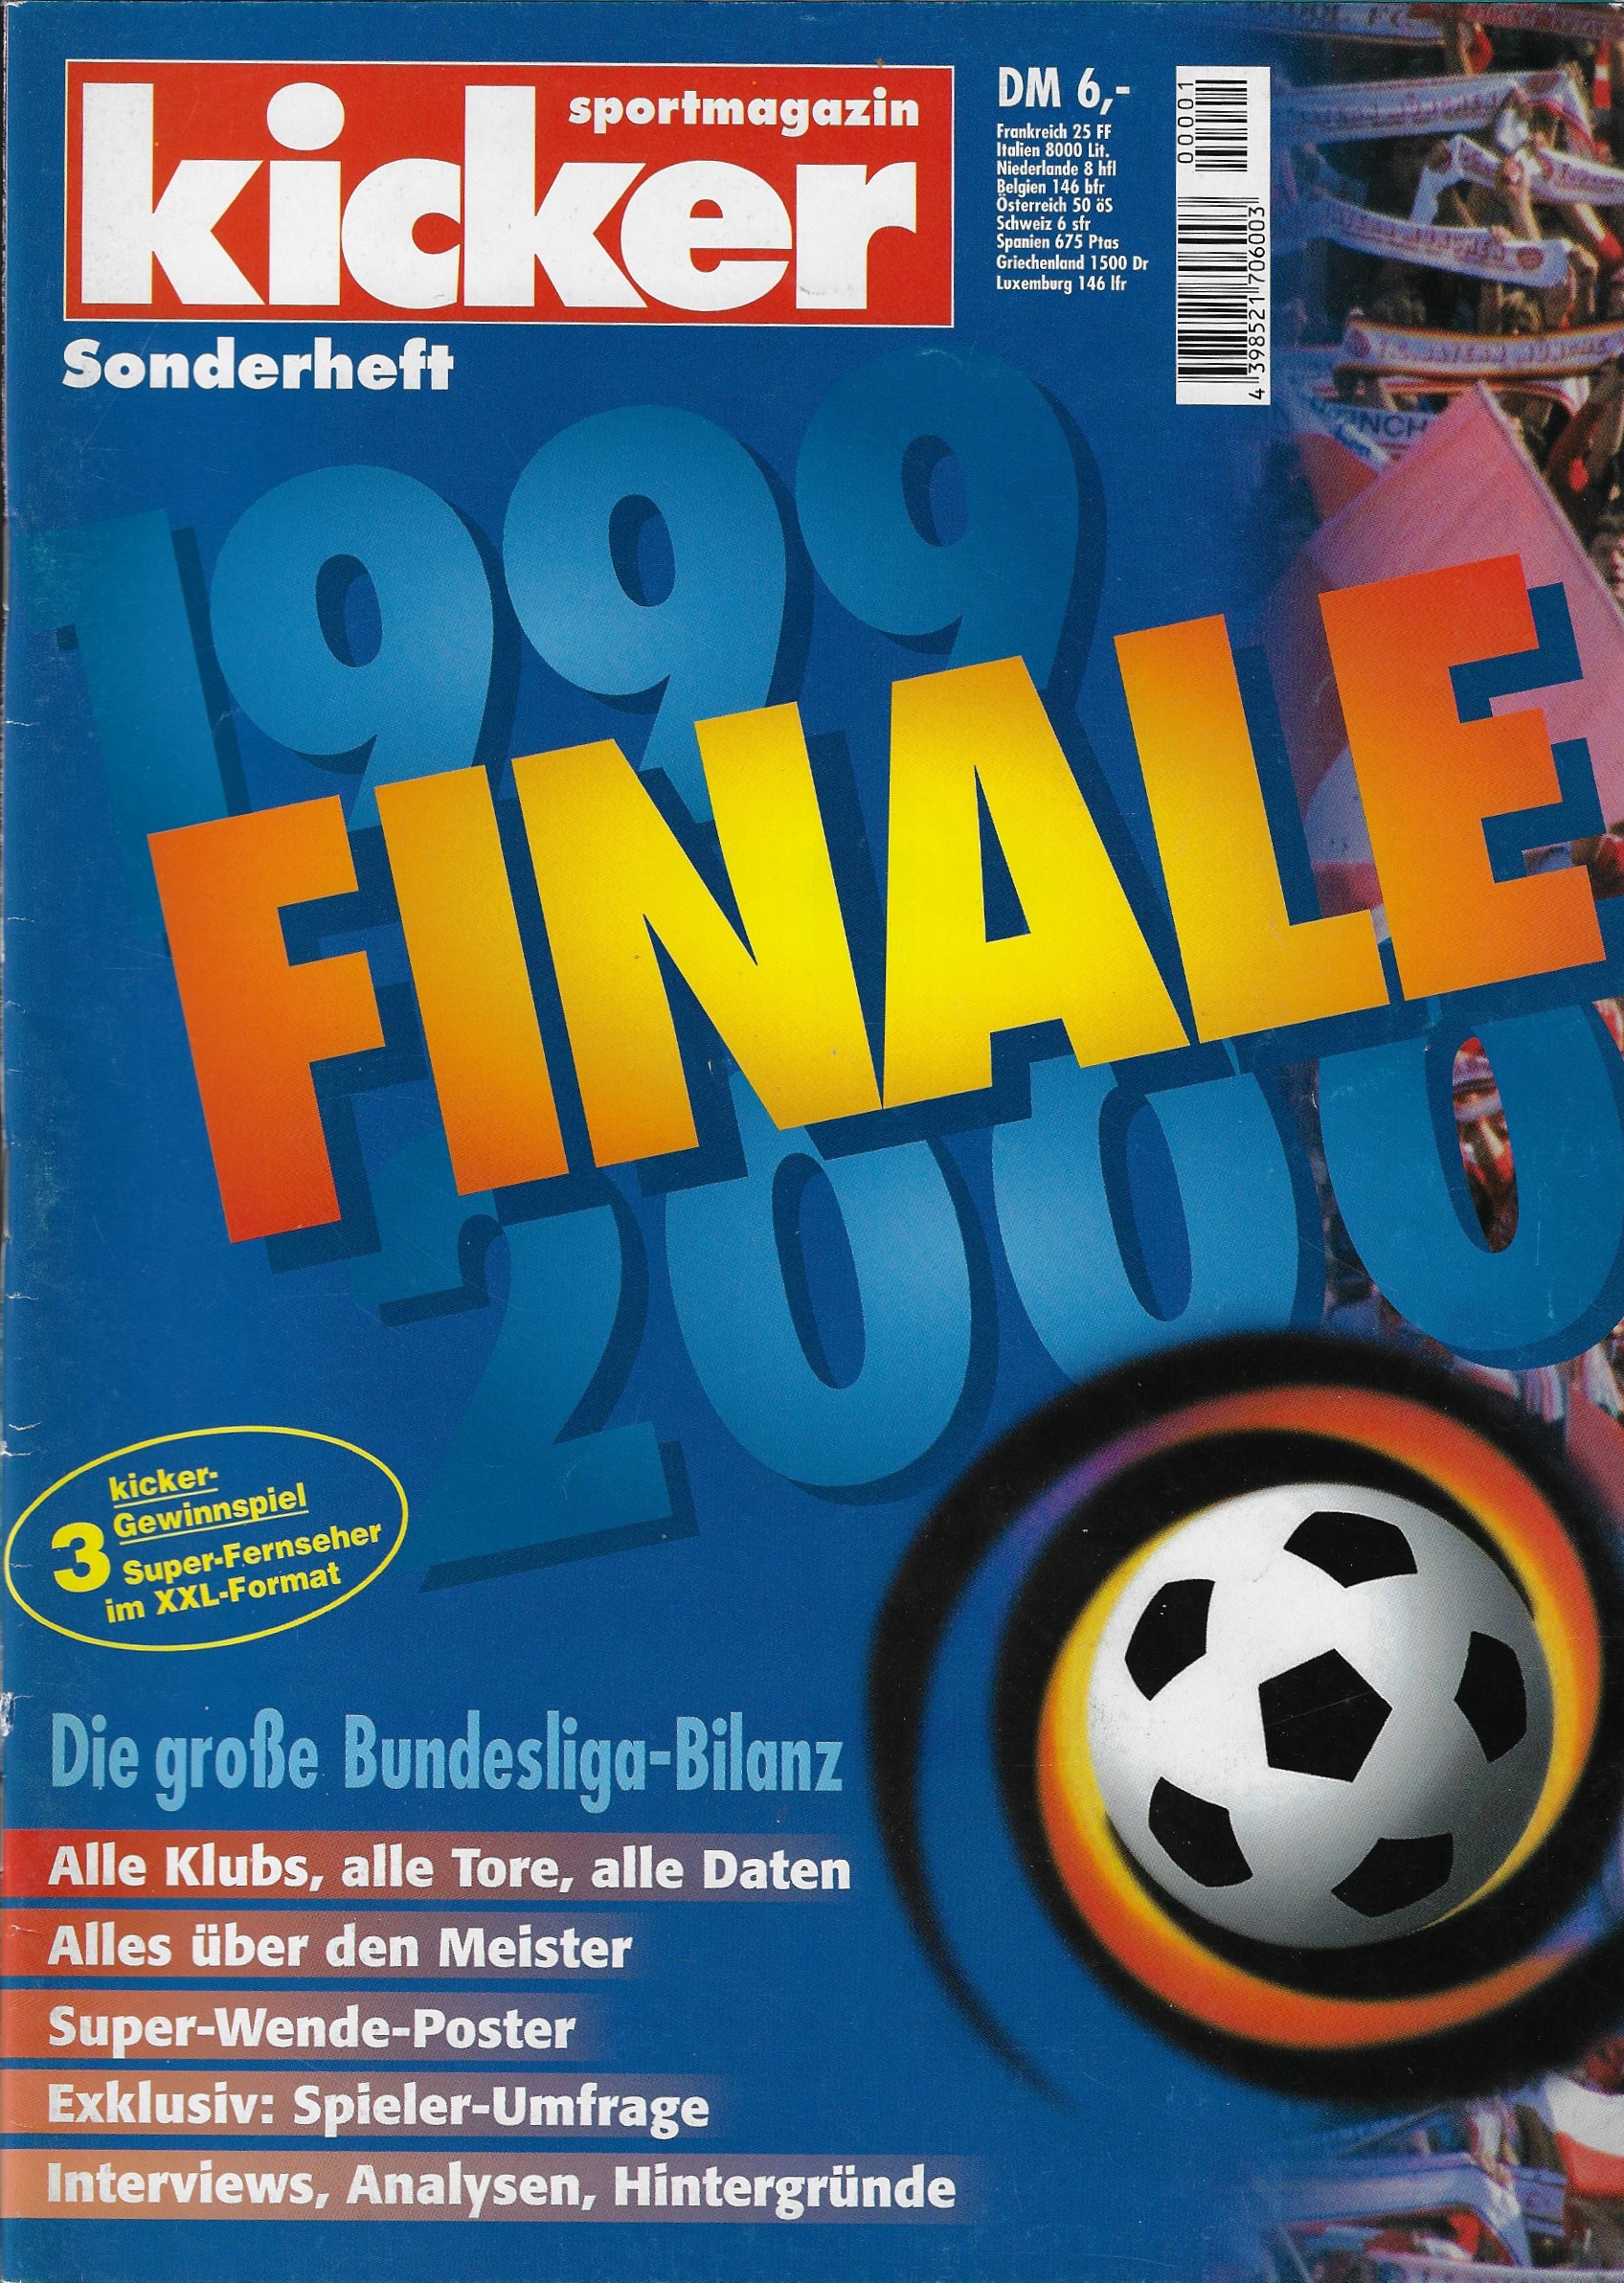  - Kicker Sportmagazin Sonderheft Finale 1999-2000 -Die groe Bundesliga -Bilanz